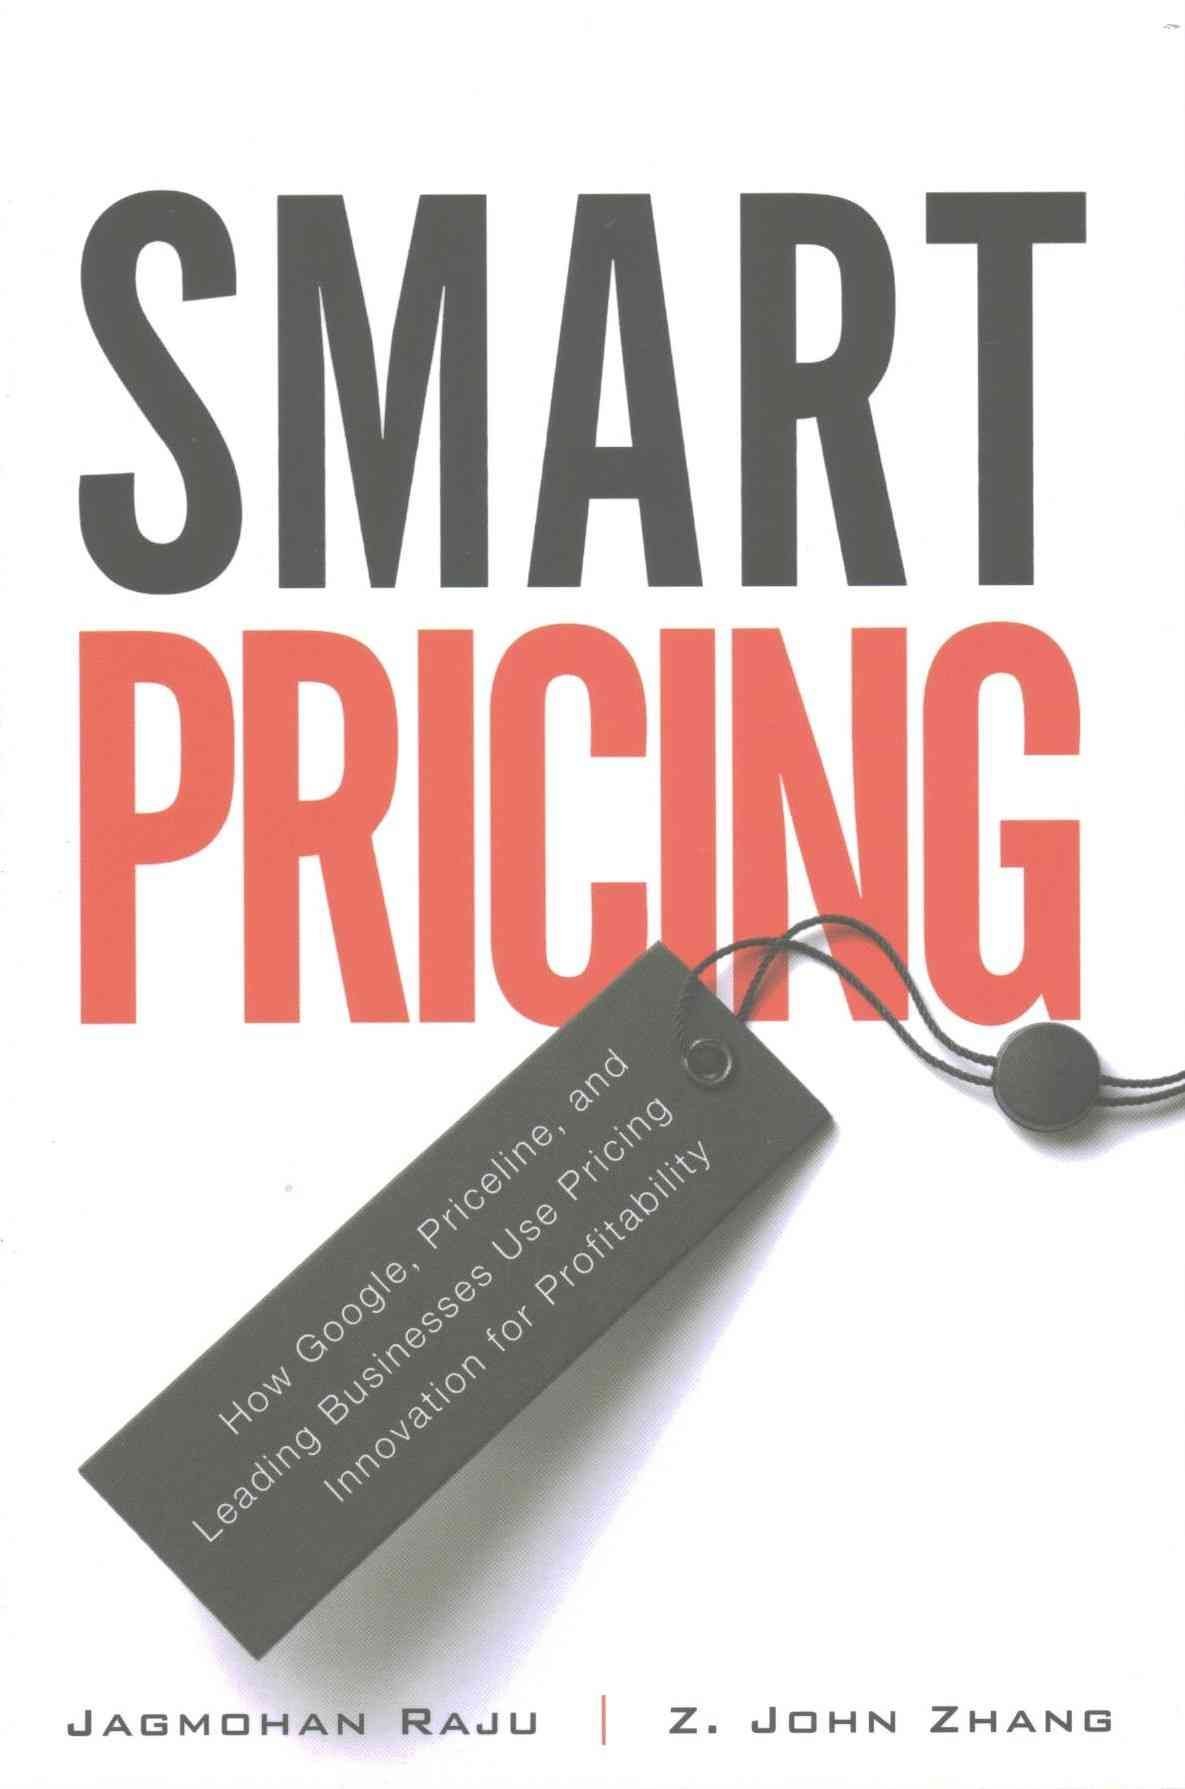 Smart Pricing